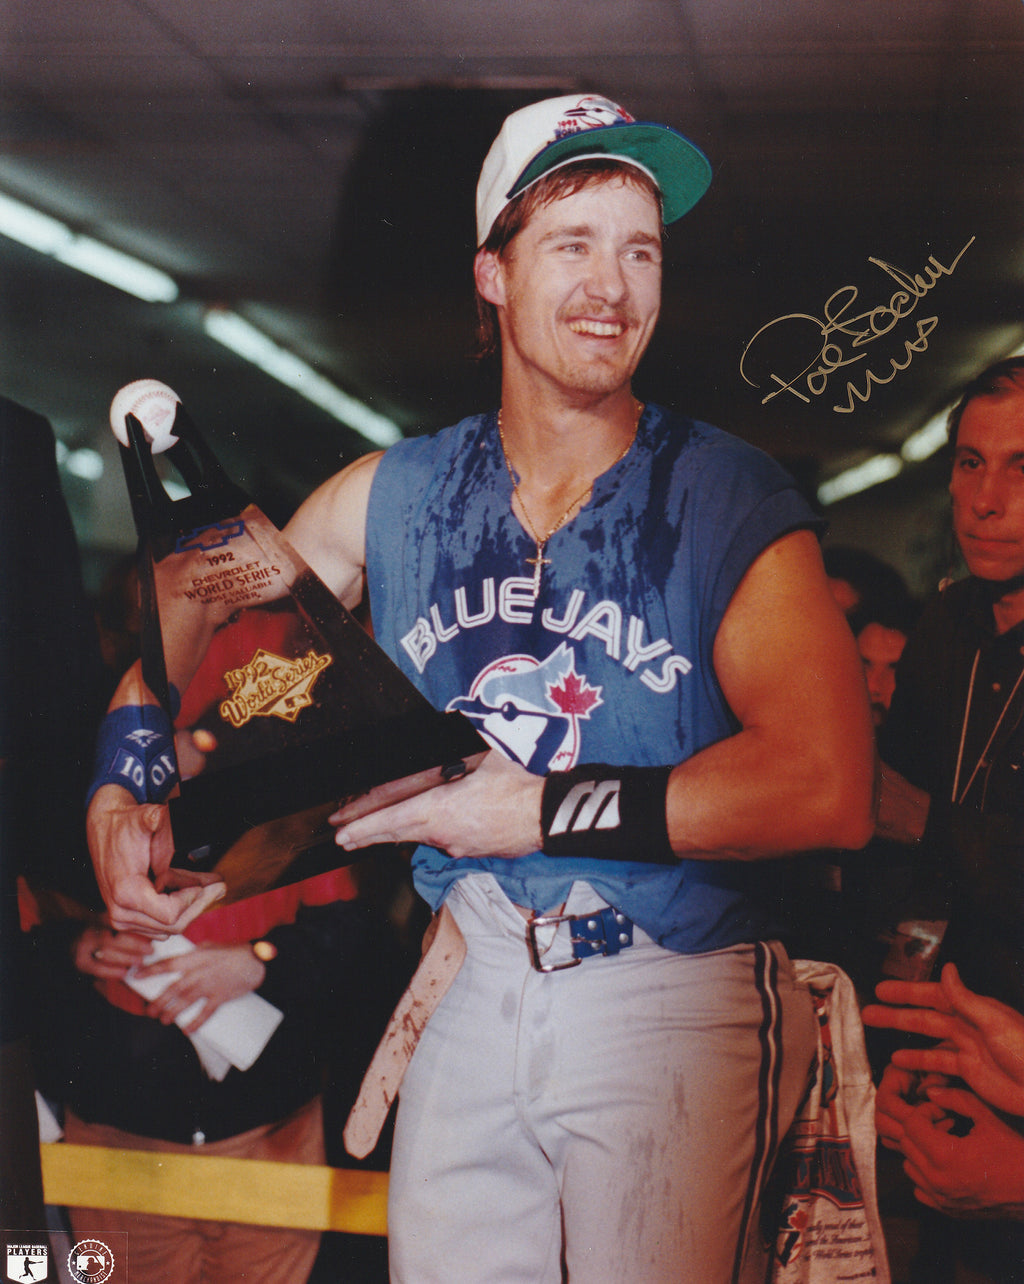 1992 Toronto Blue Jays World Series Champions 8X10 Team Photo